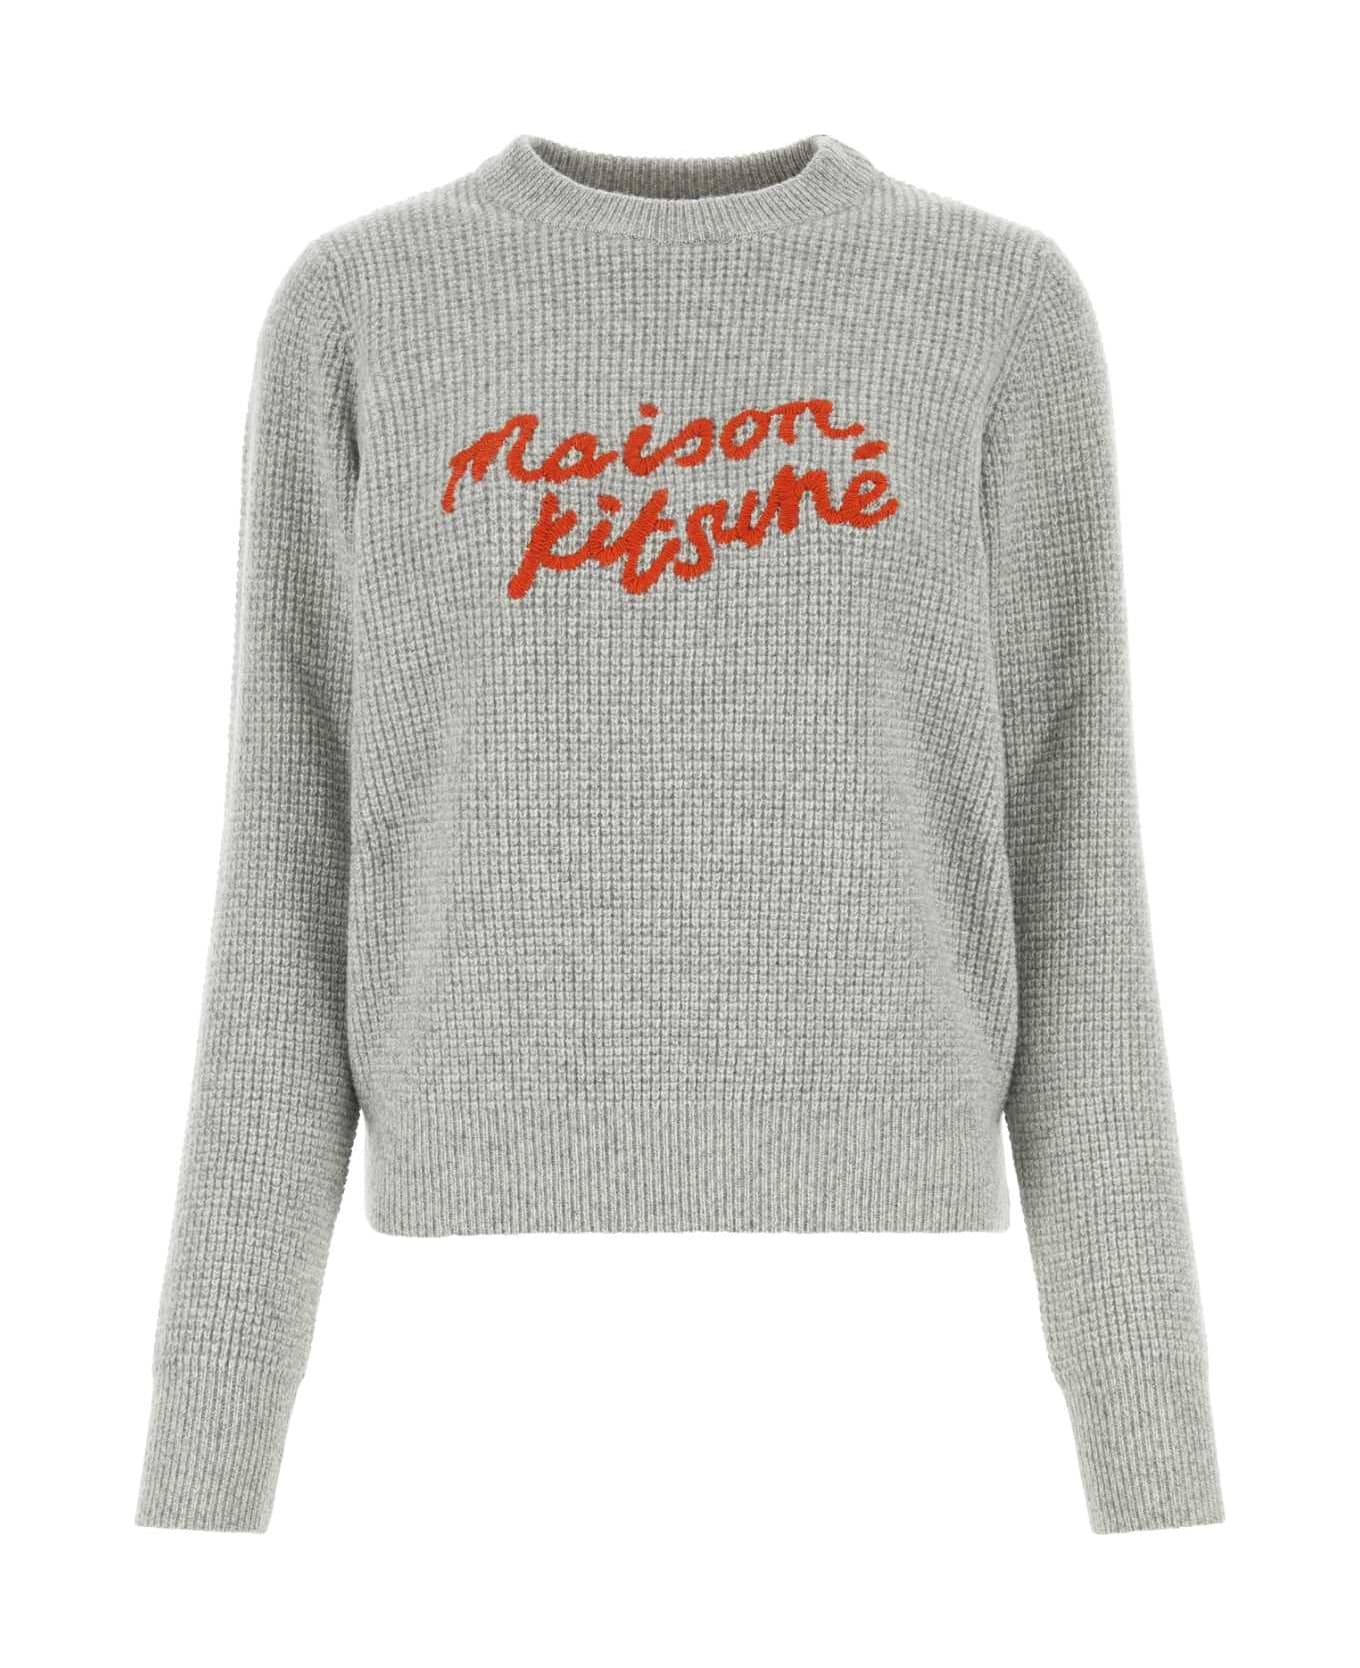 Maison Kitsuné Light Grey Wool Sweater - LIGHT GREY MELANGE